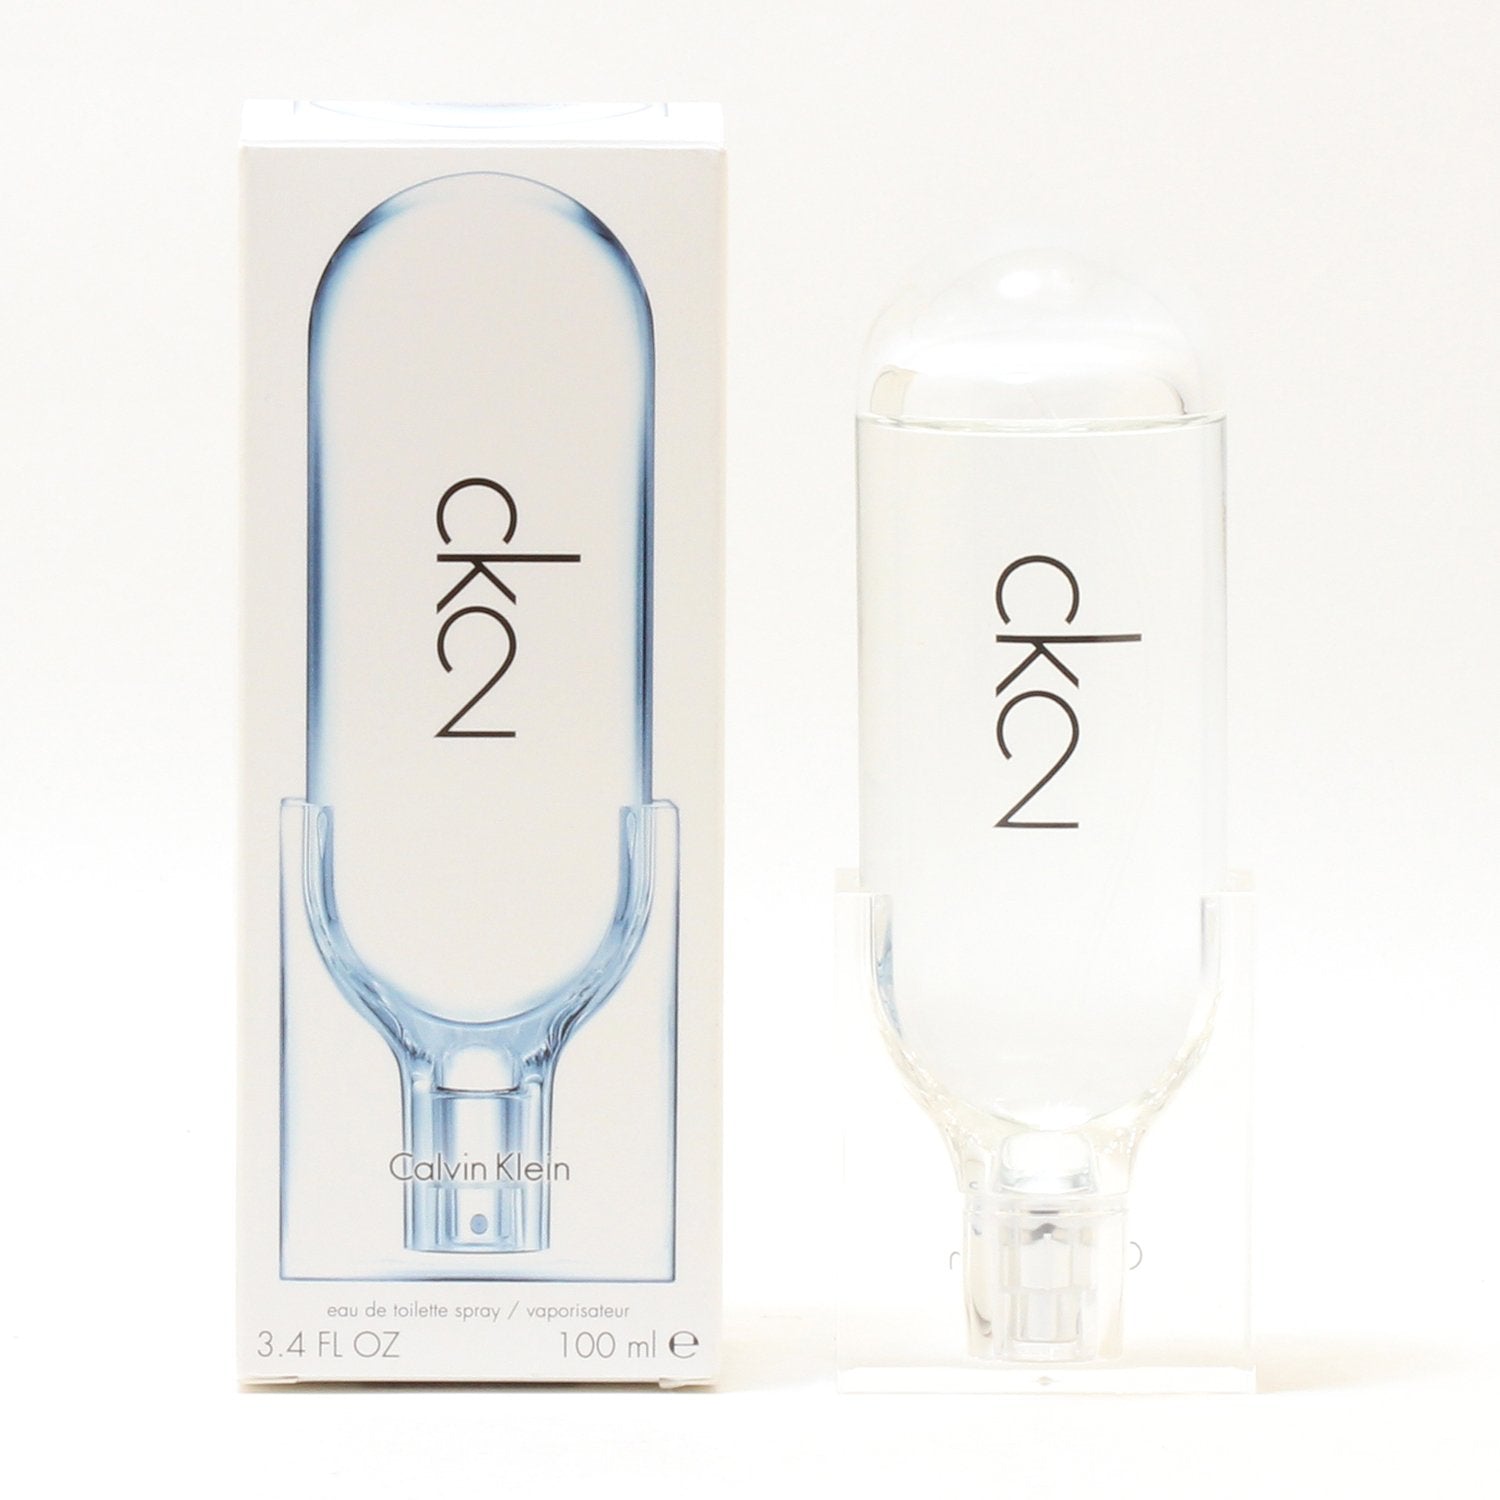 Perfume - CK 2 BY CALVIN KLEIN UNISEX - EAU DE TOILETTE SPRAY, 3.4 OZ